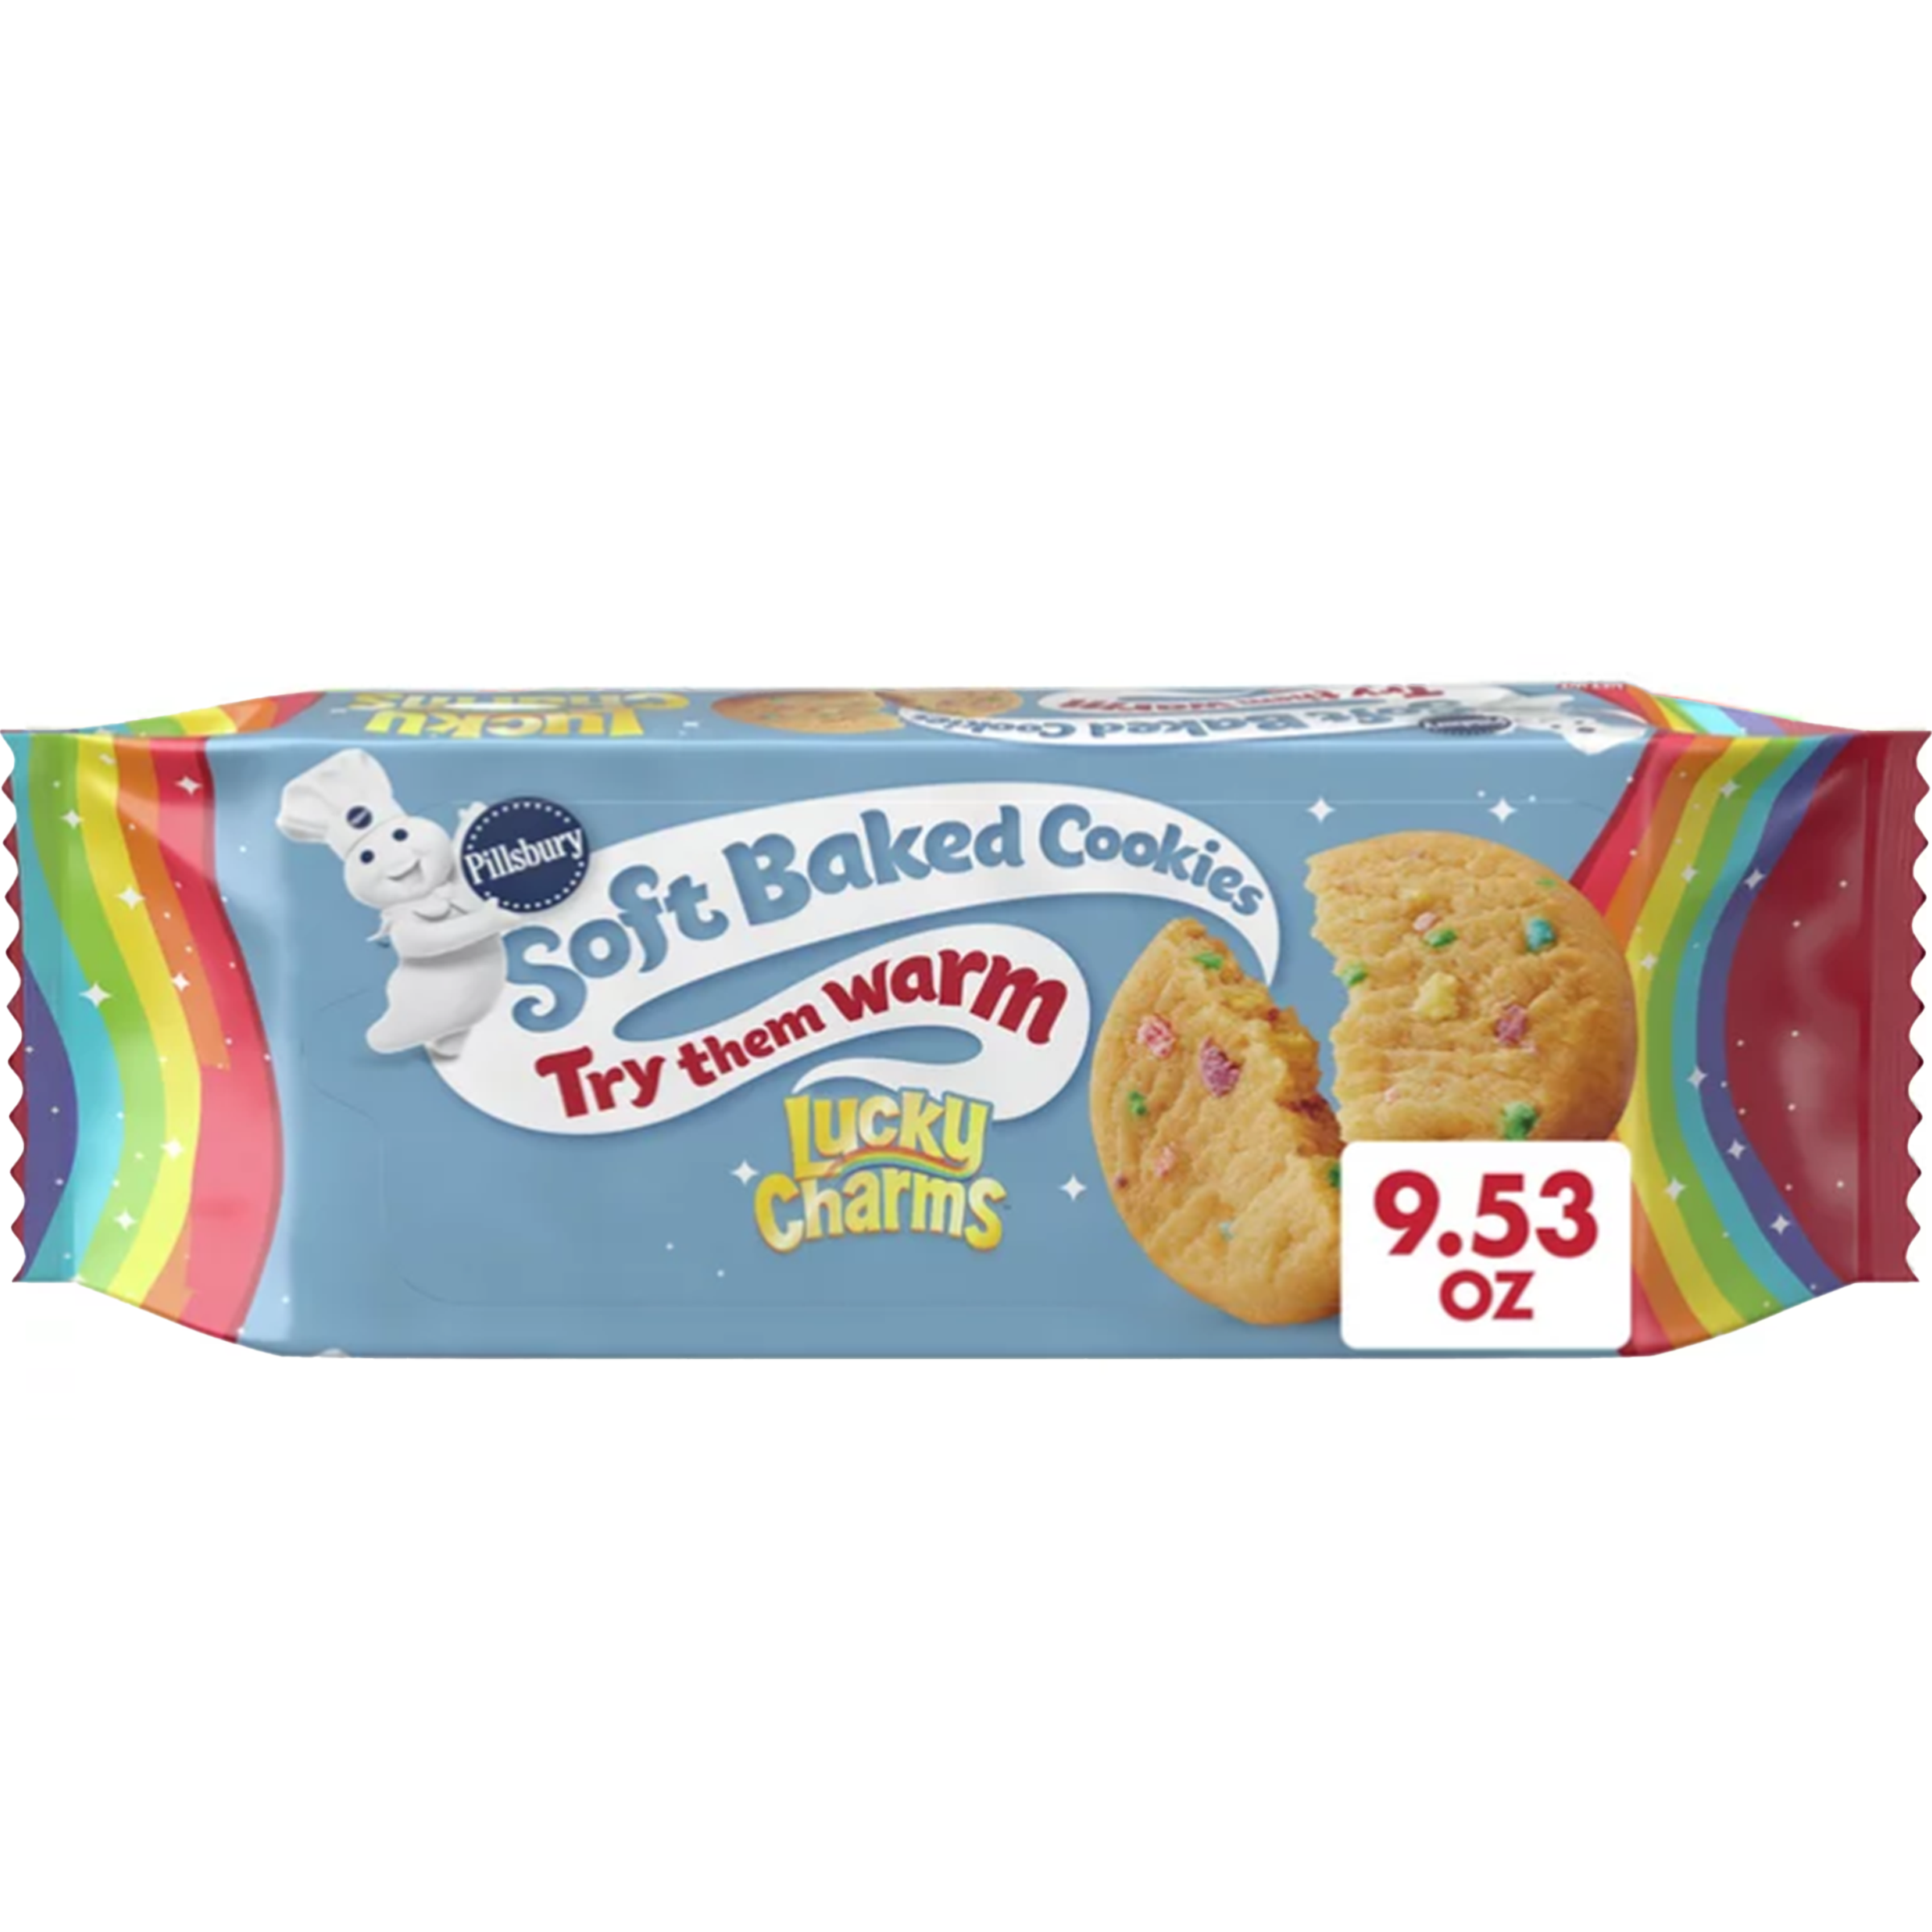 Pillsbury Soft Baked Cookies - Lucky Charms